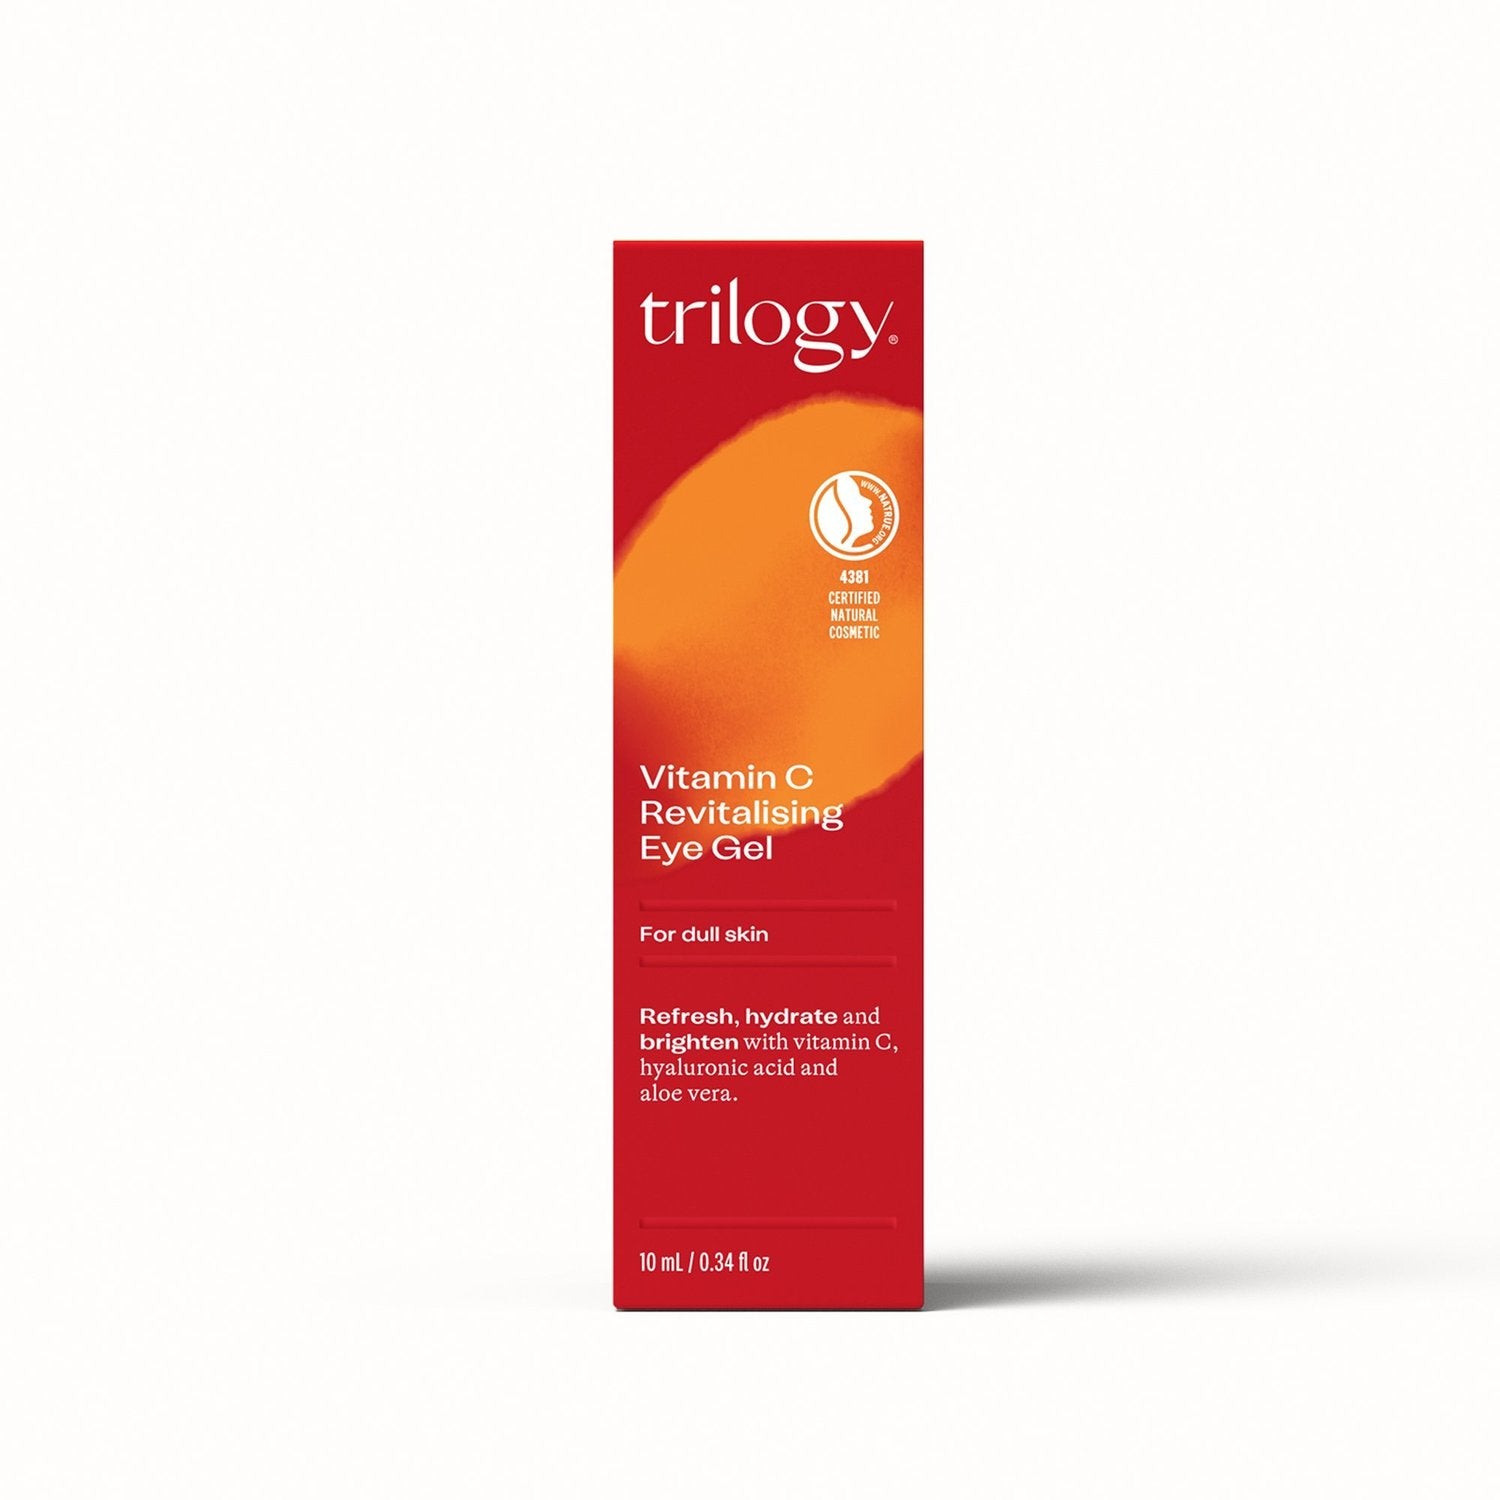 Trilogy Vitamin C Revitalising Eye Gel 10ml.